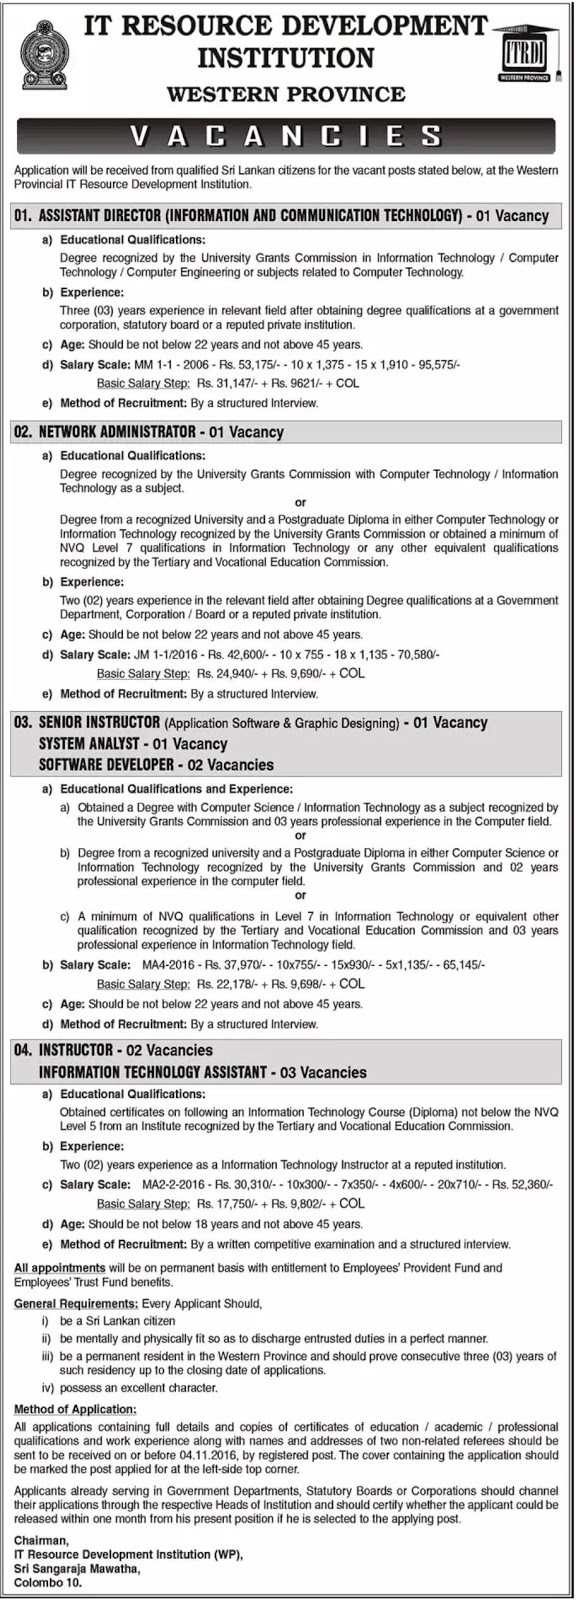 IT Resource Development Institute Vacancies in Western Province